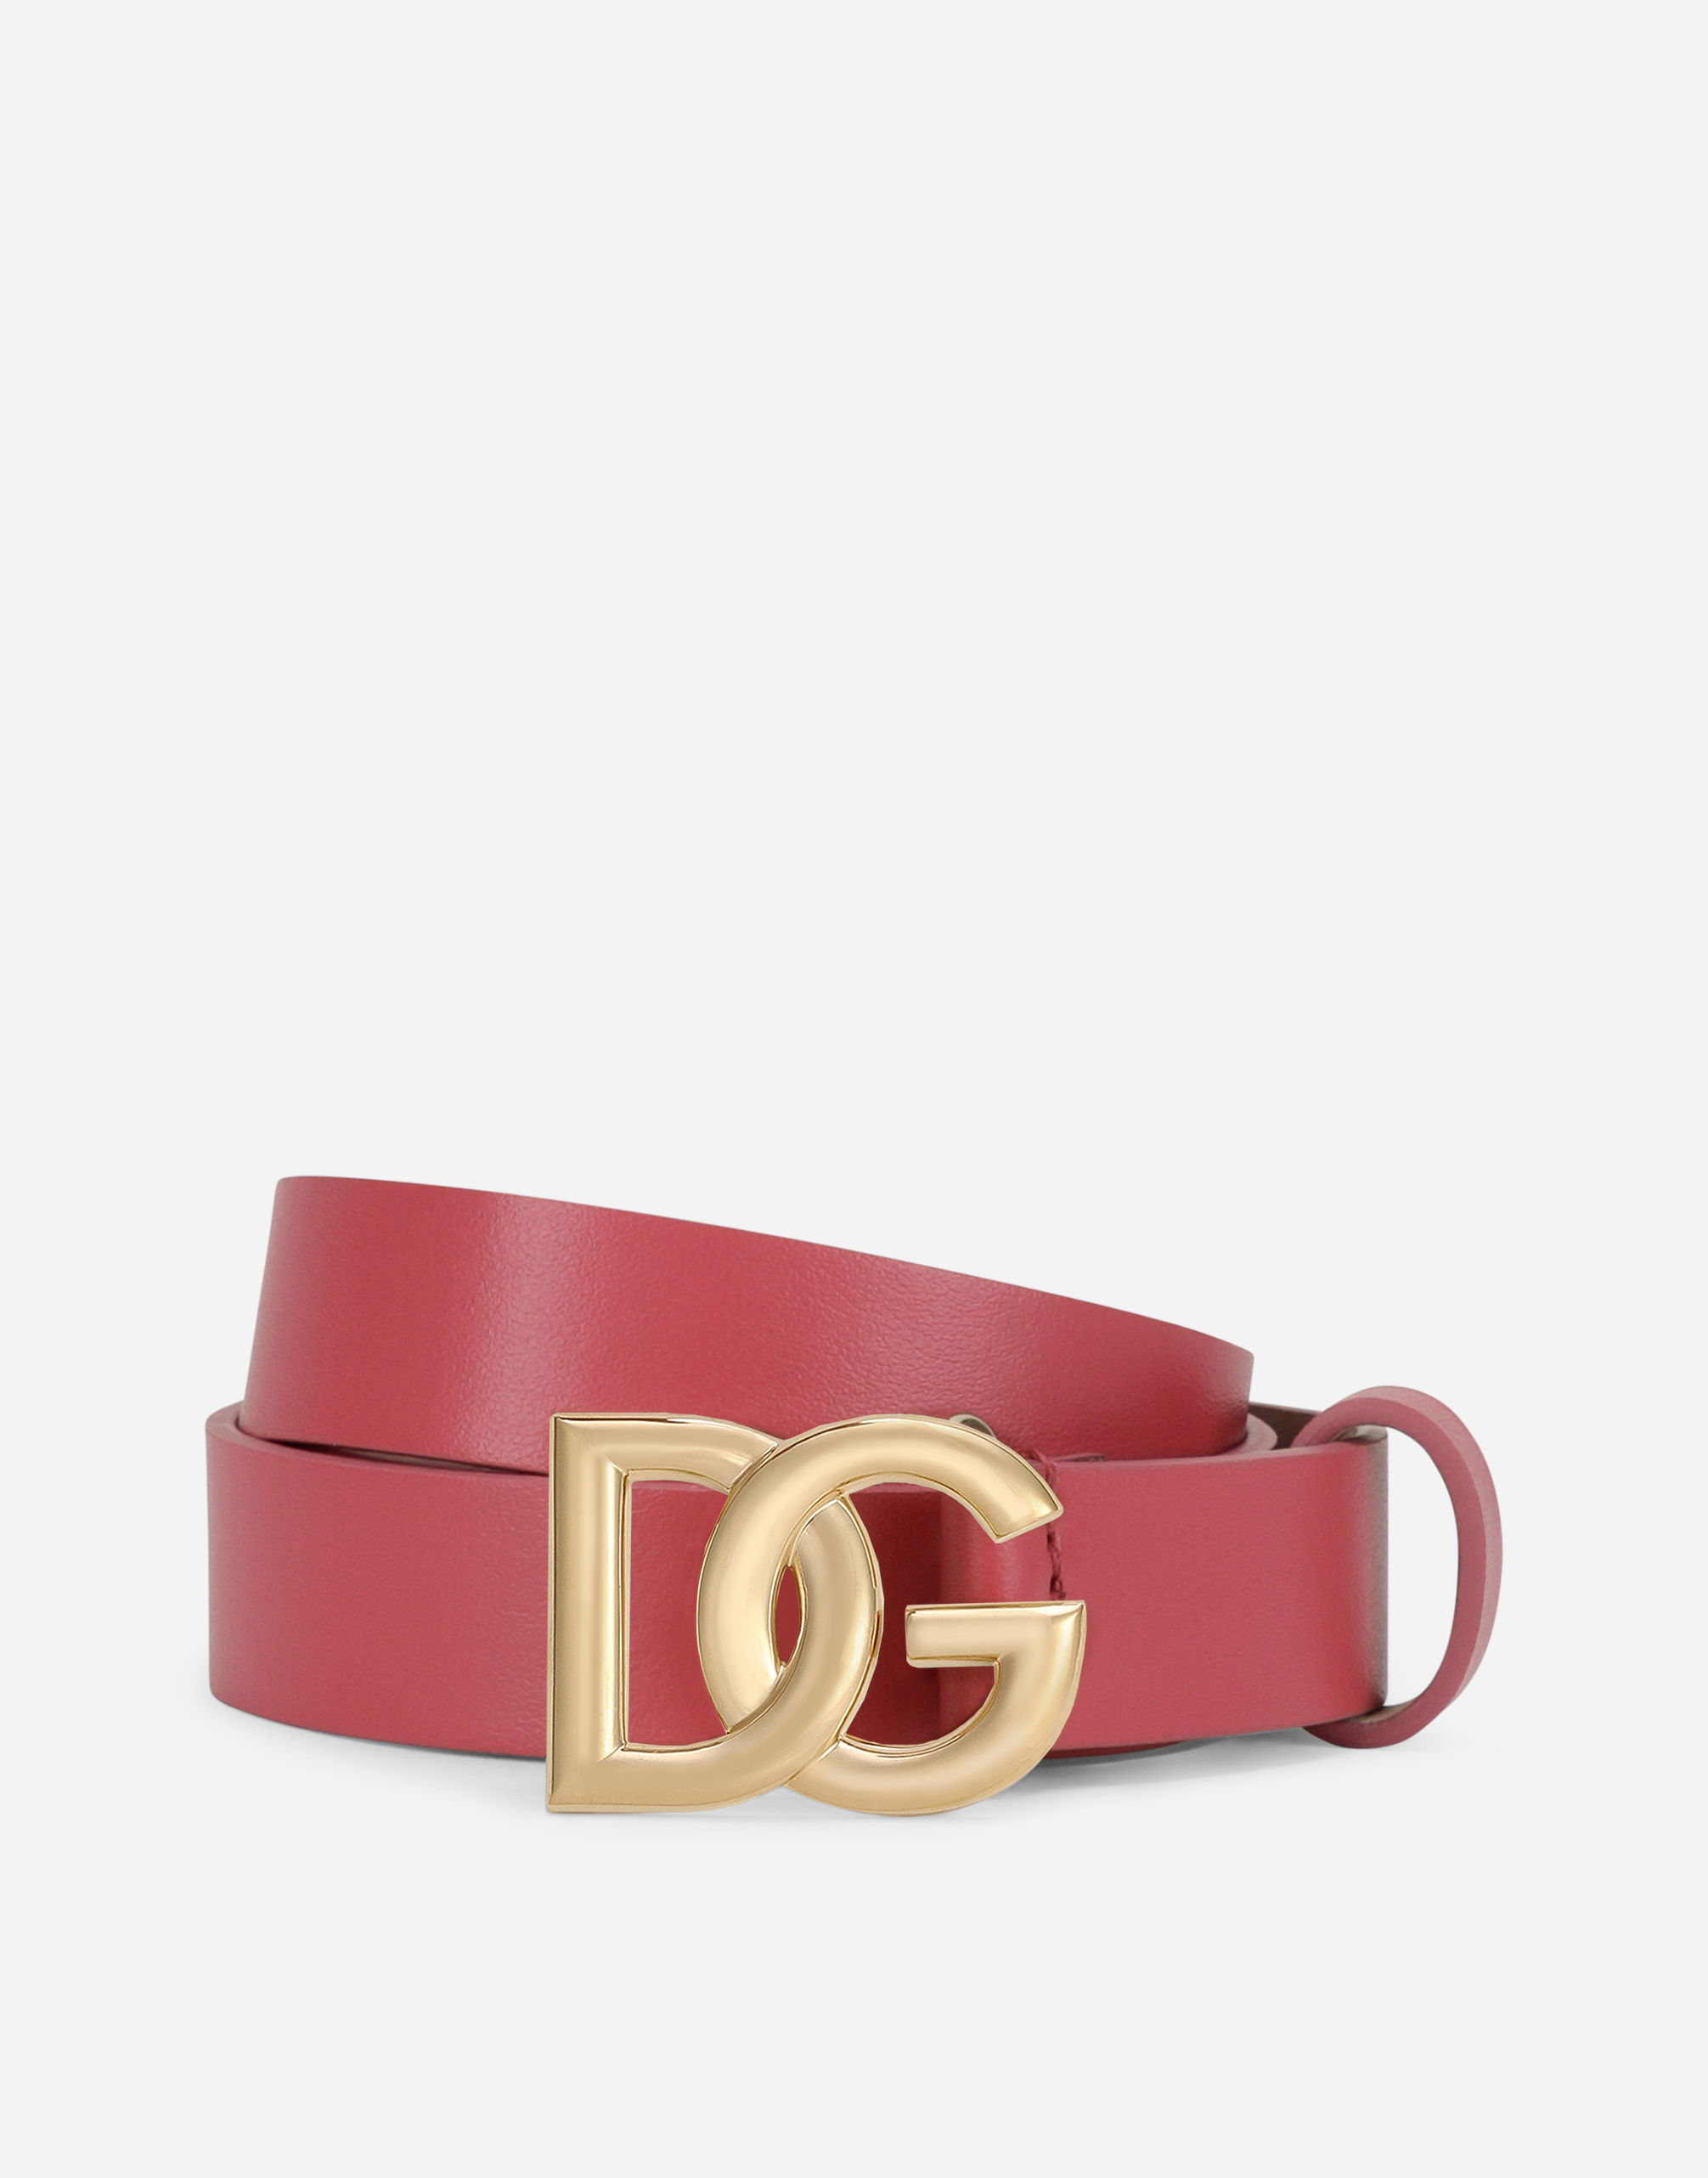 Calfskin nappa leather belt with DG logo in Fuchsia